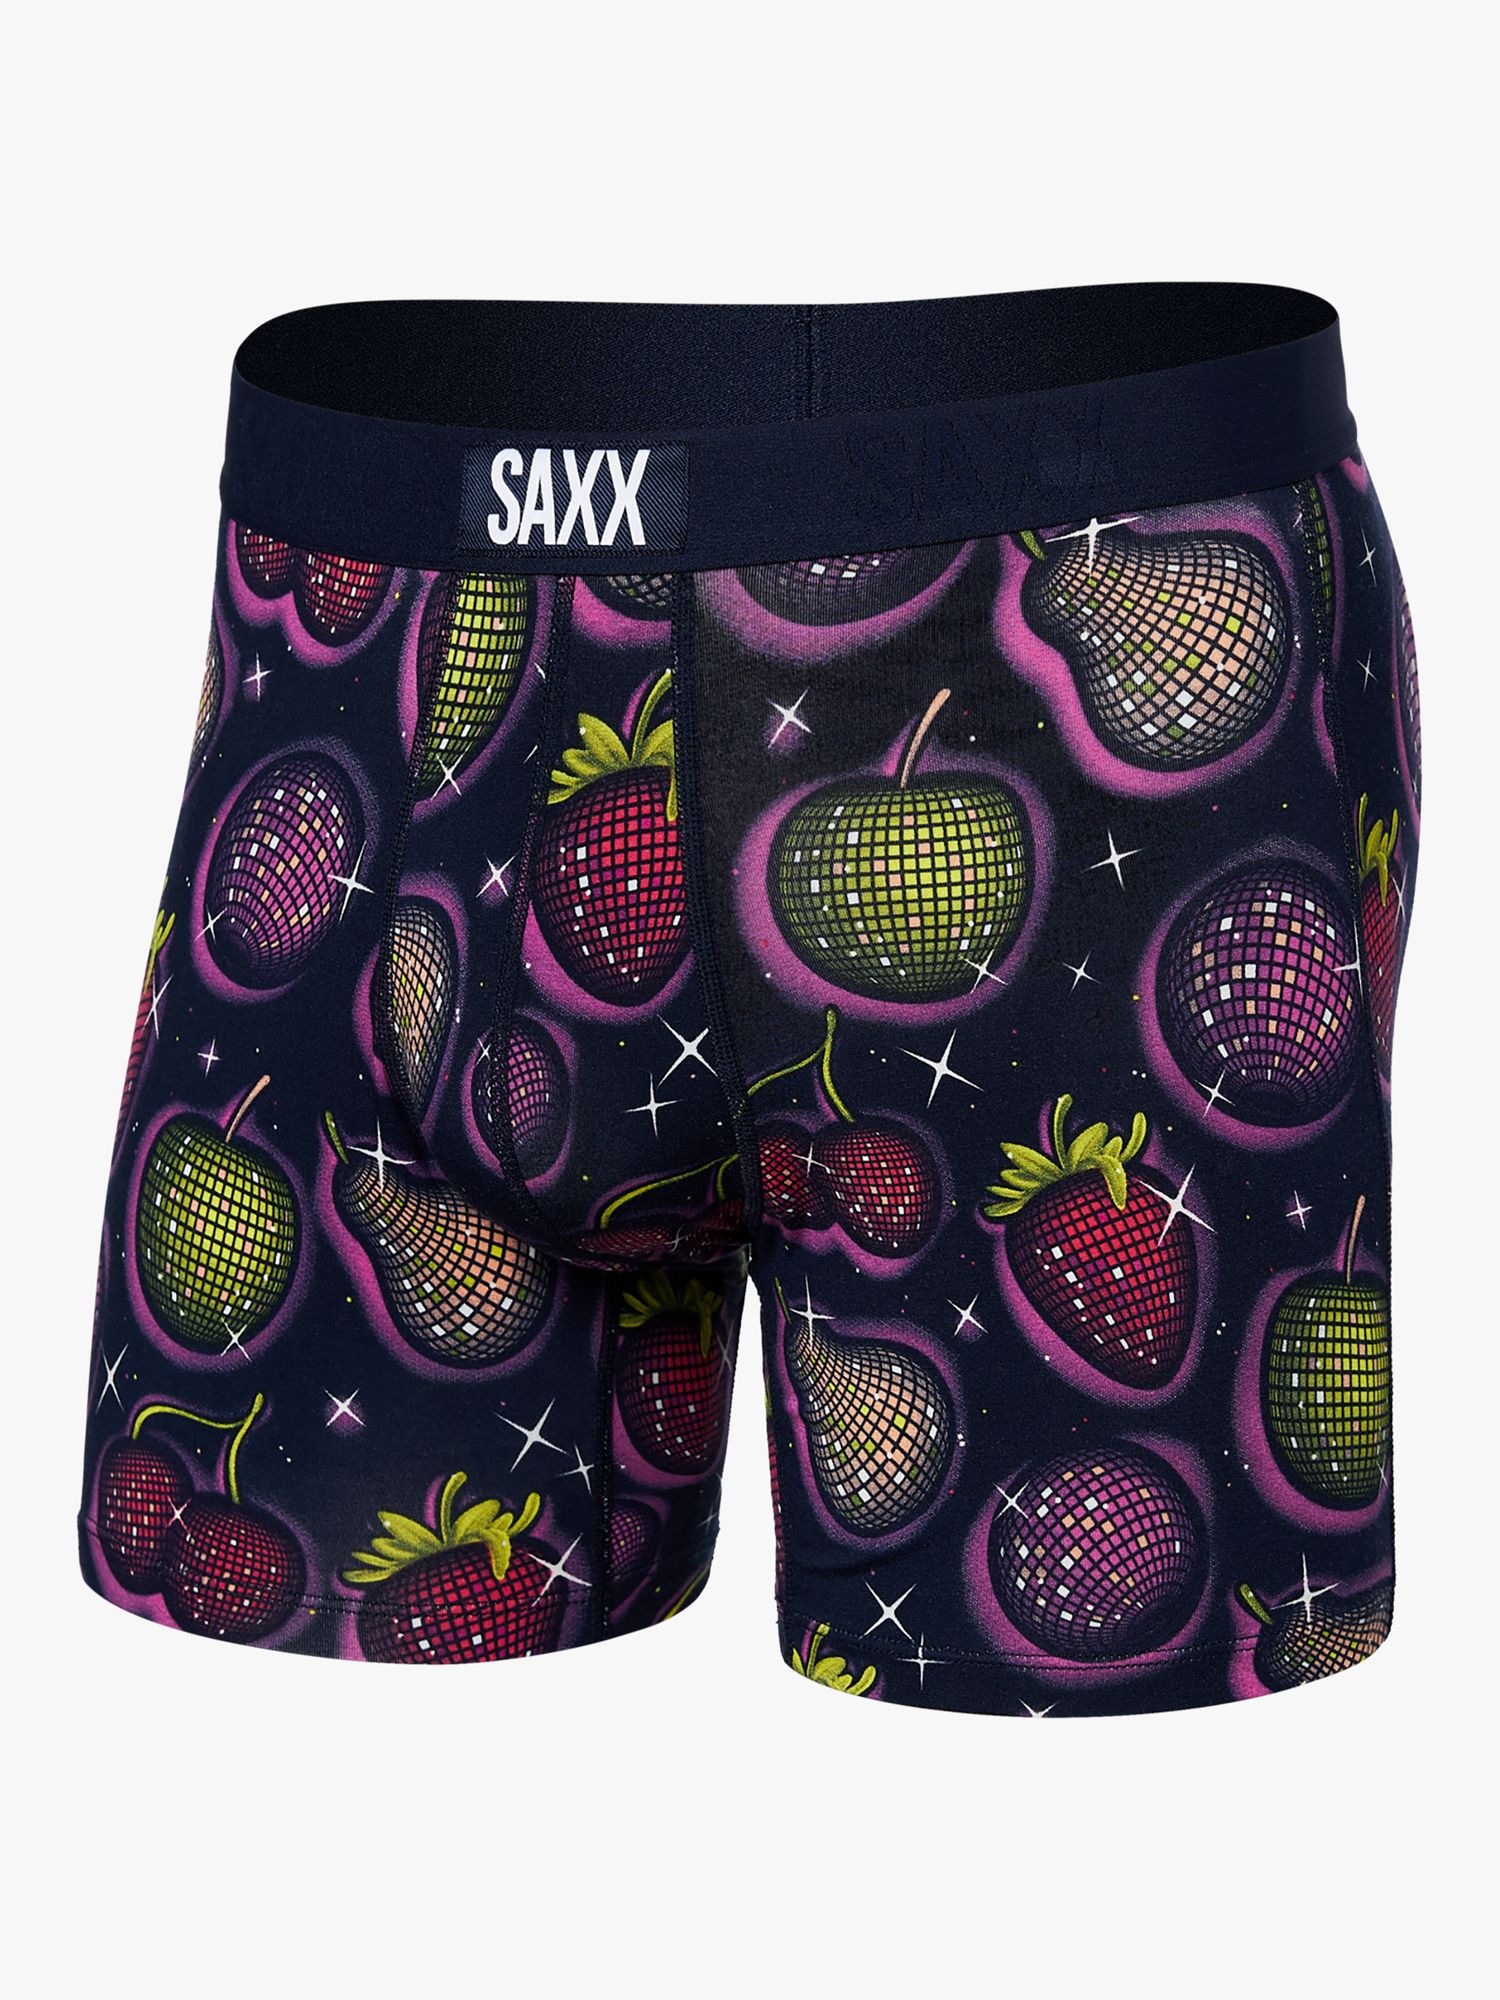 SAXX Vibe Slim Fit Disco Fruit Print Trunks, Multi, XL